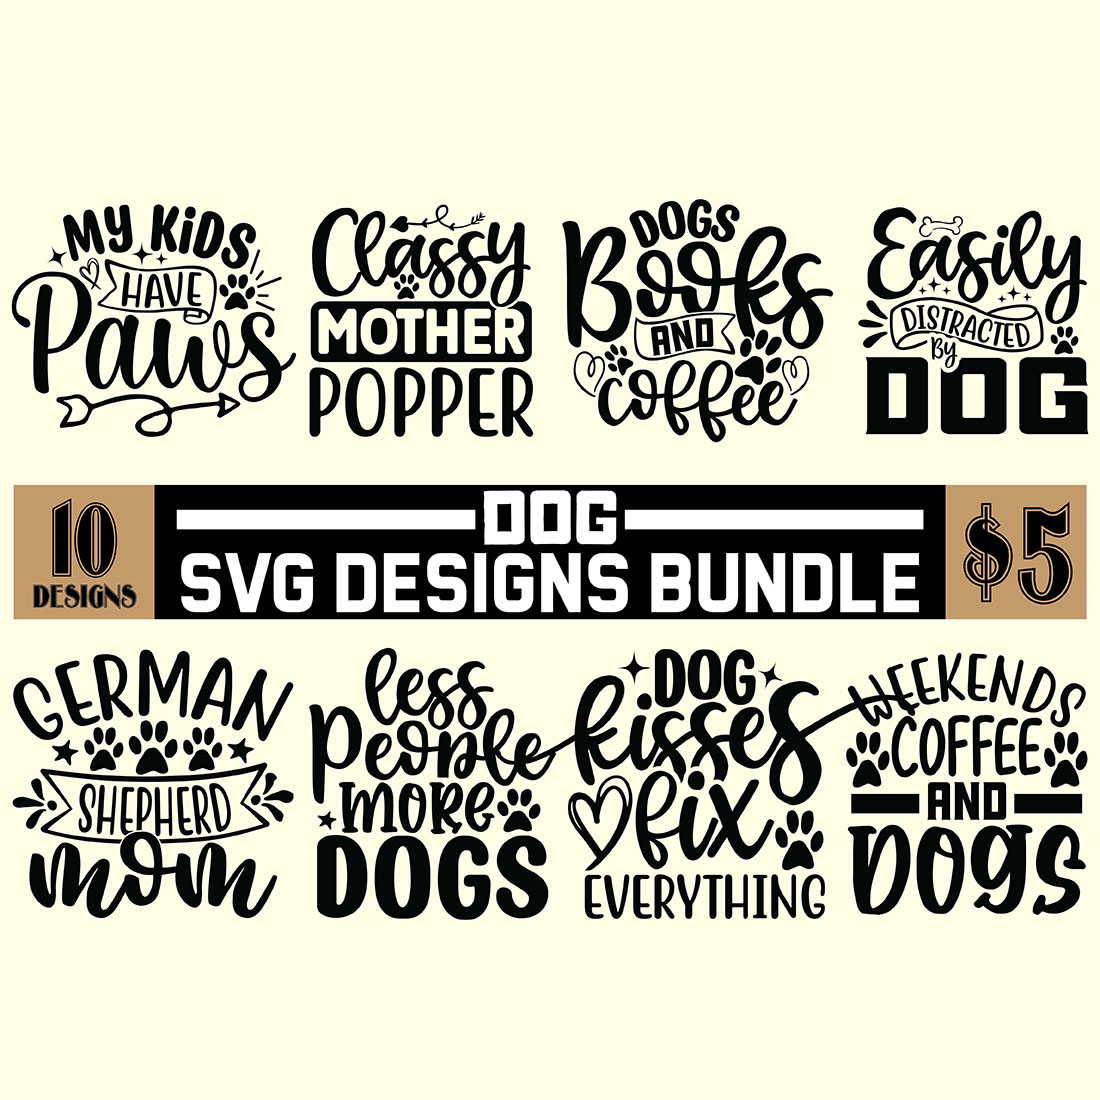 Bundle of svg designs for dogs.